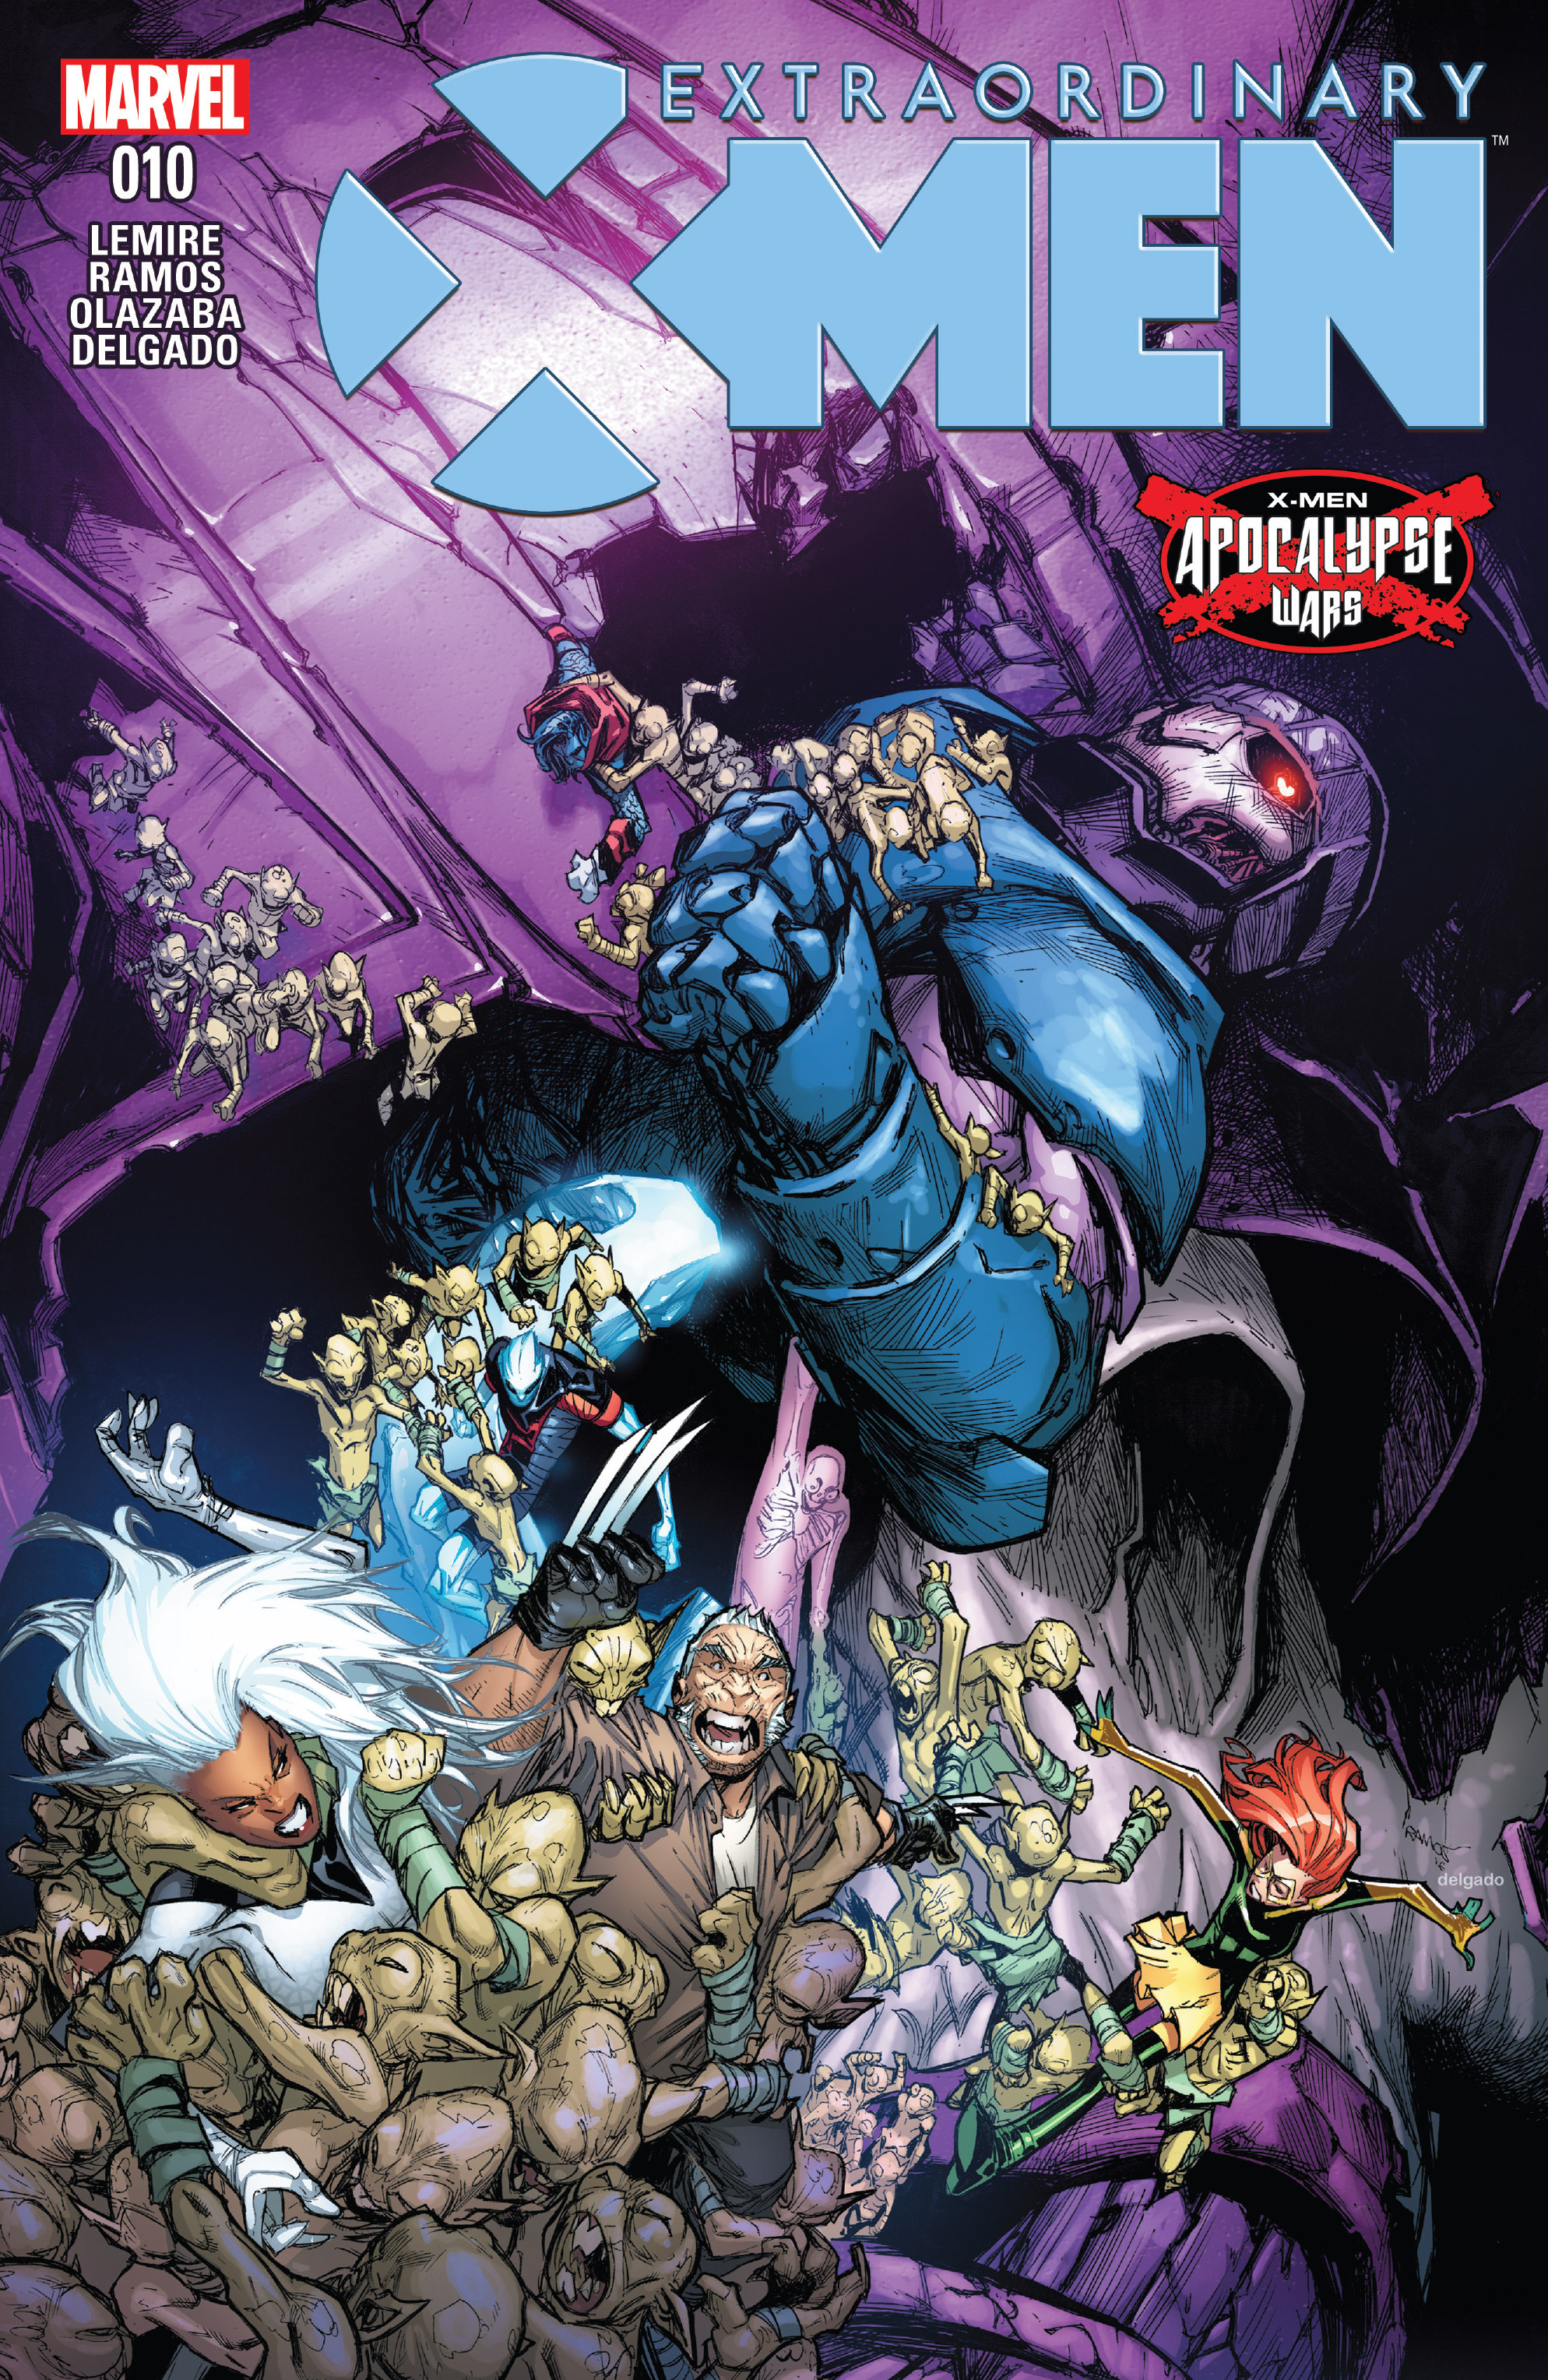 Extraordinary X-Men Issue 10 title